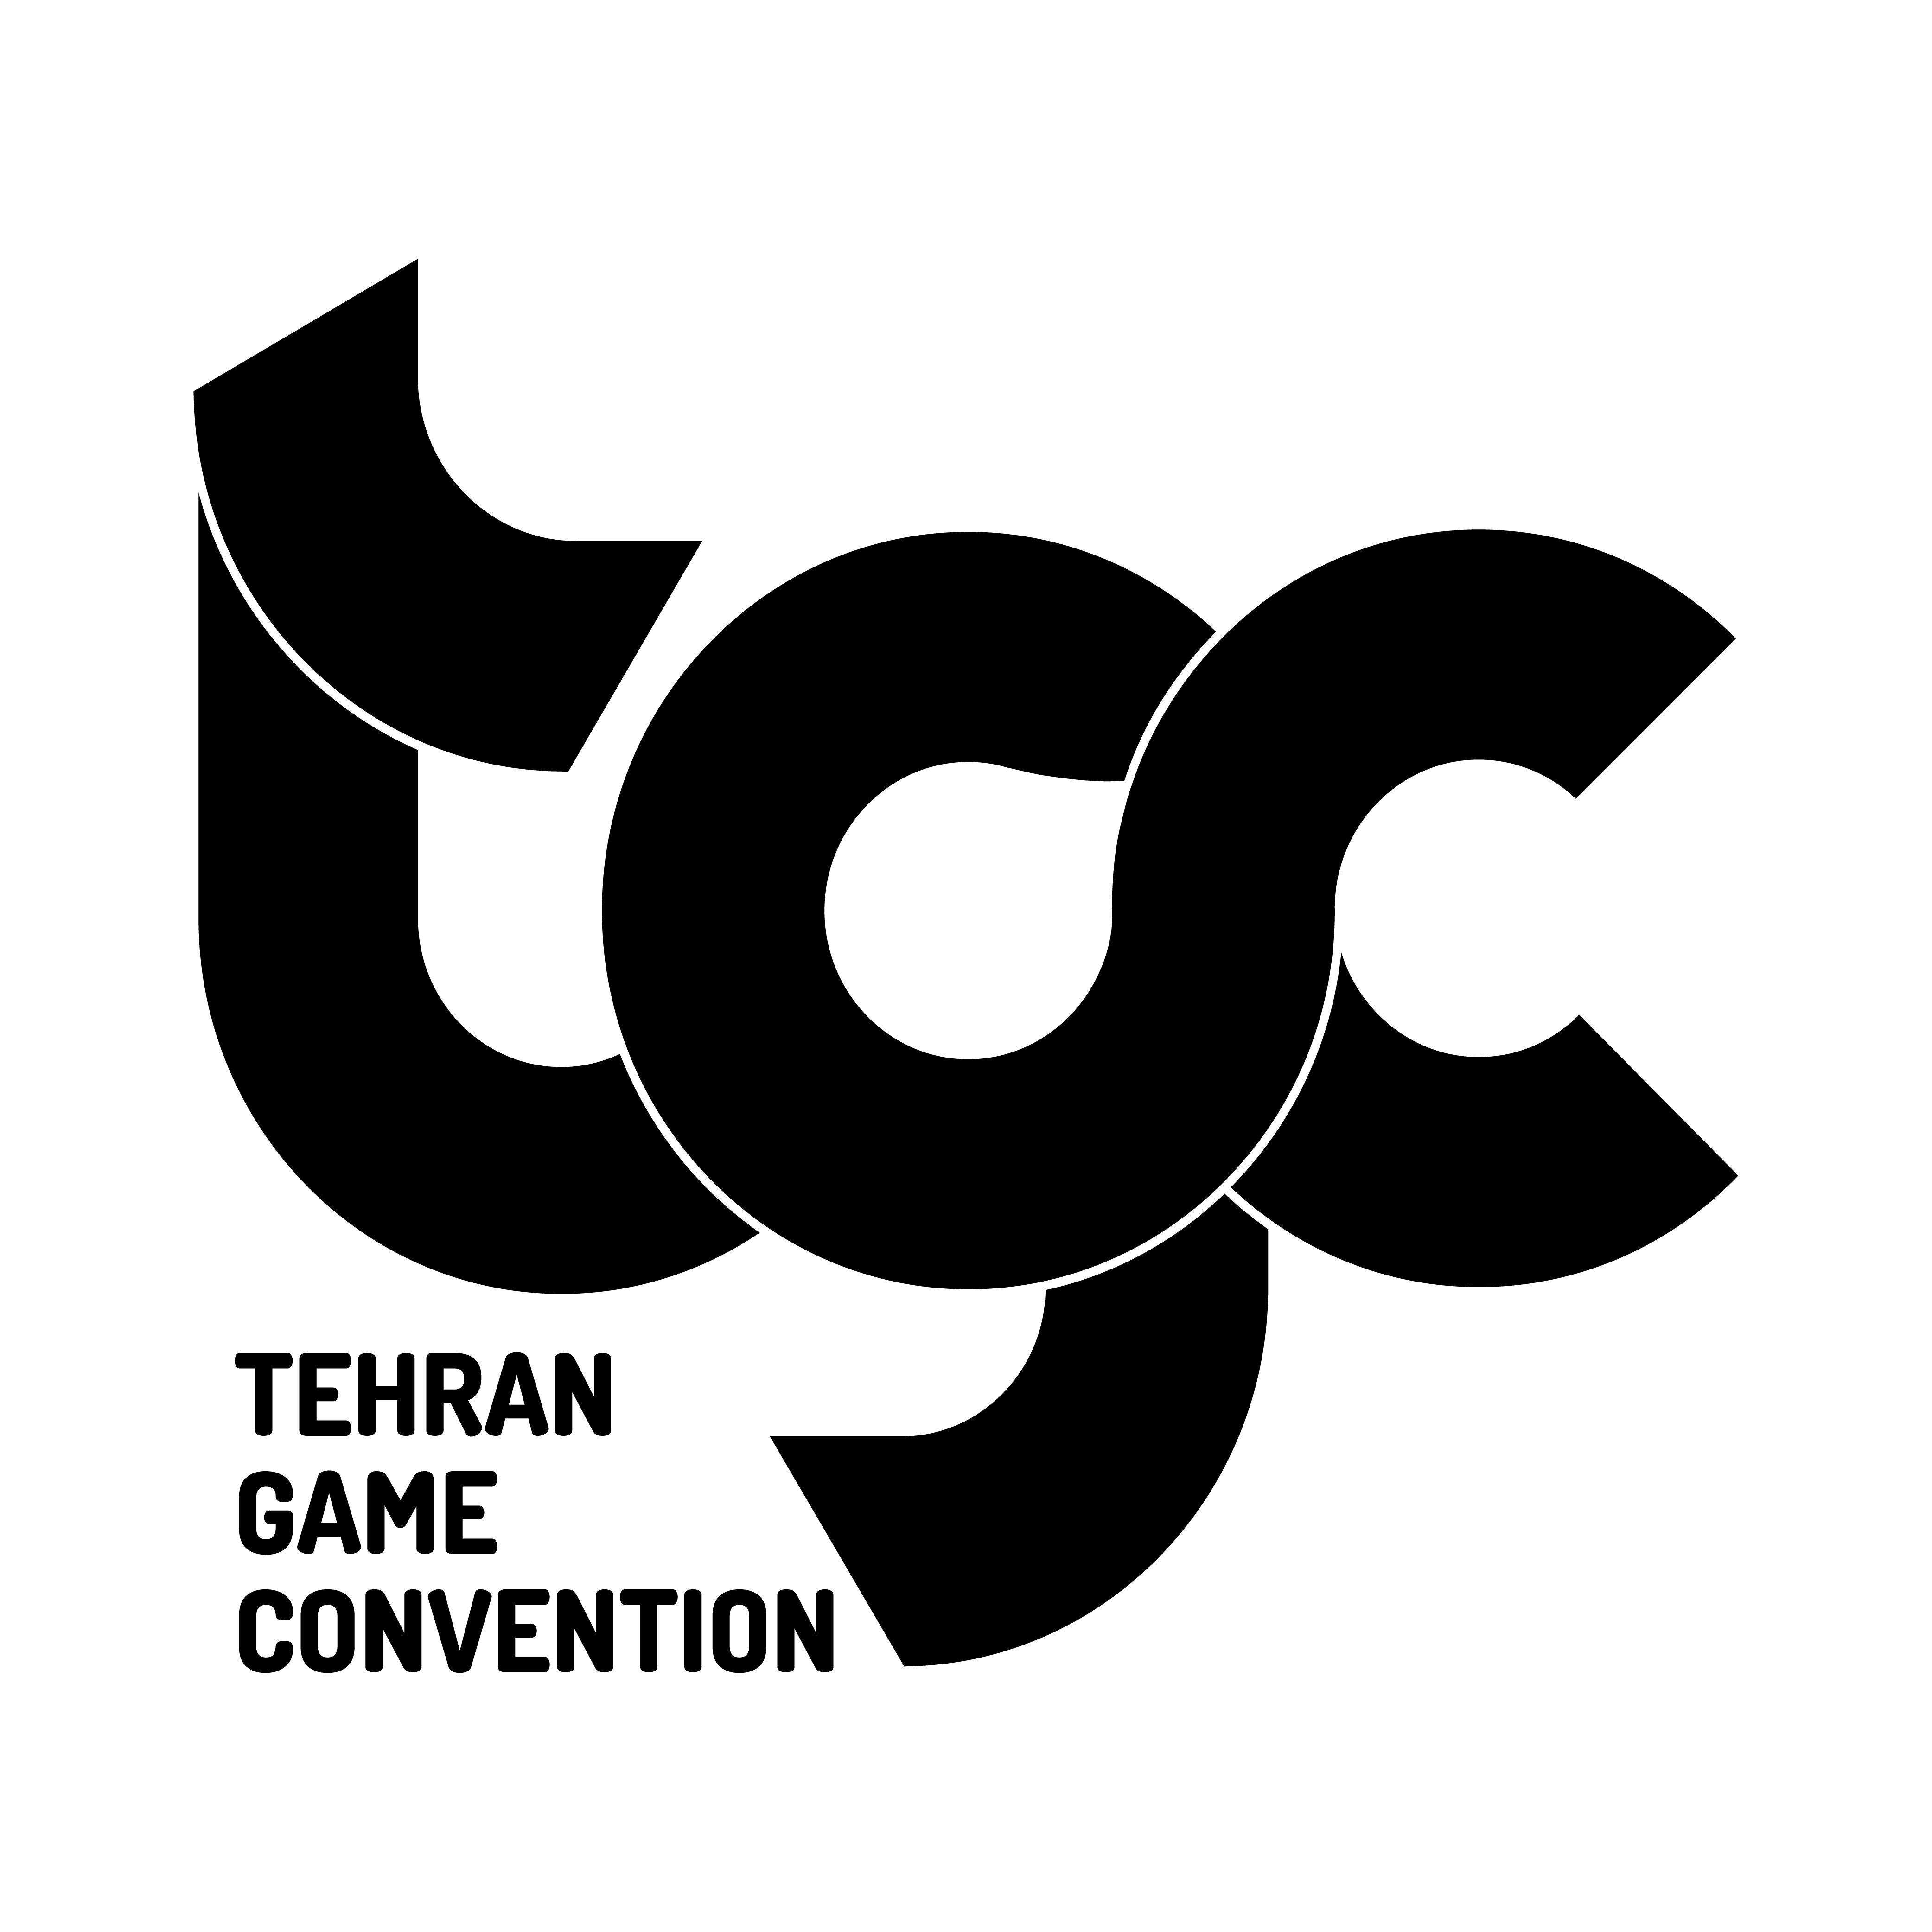 TGC Logo - Media Kit. Tehran Game Convention